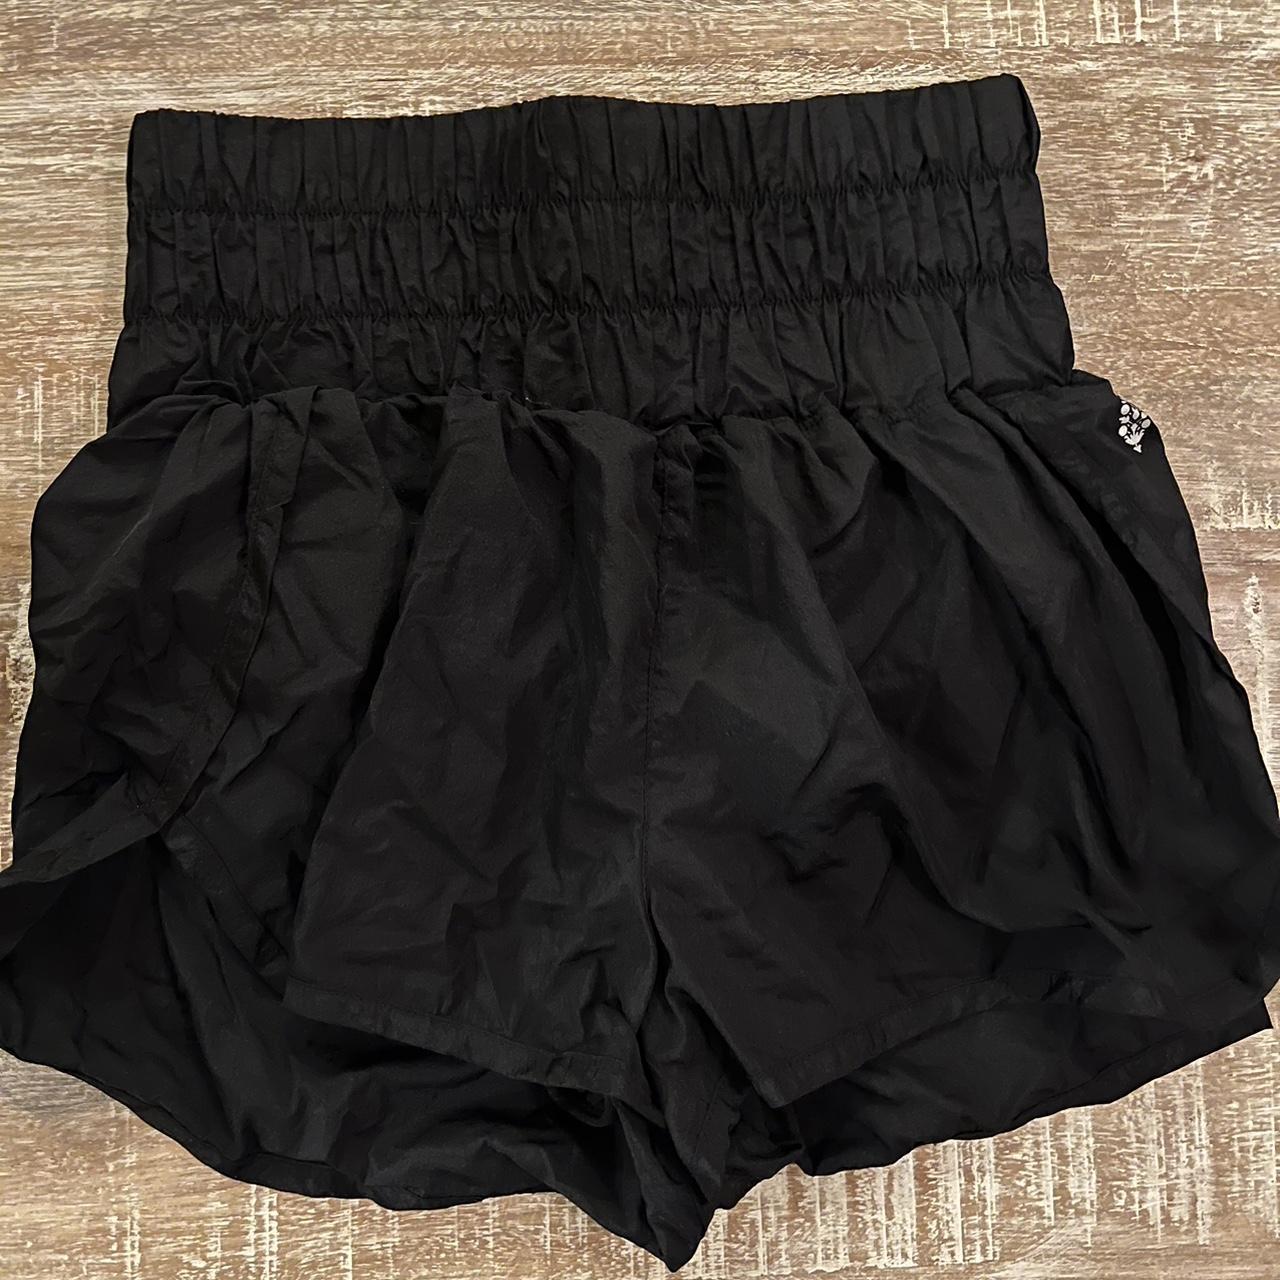 Black Sport Shorts